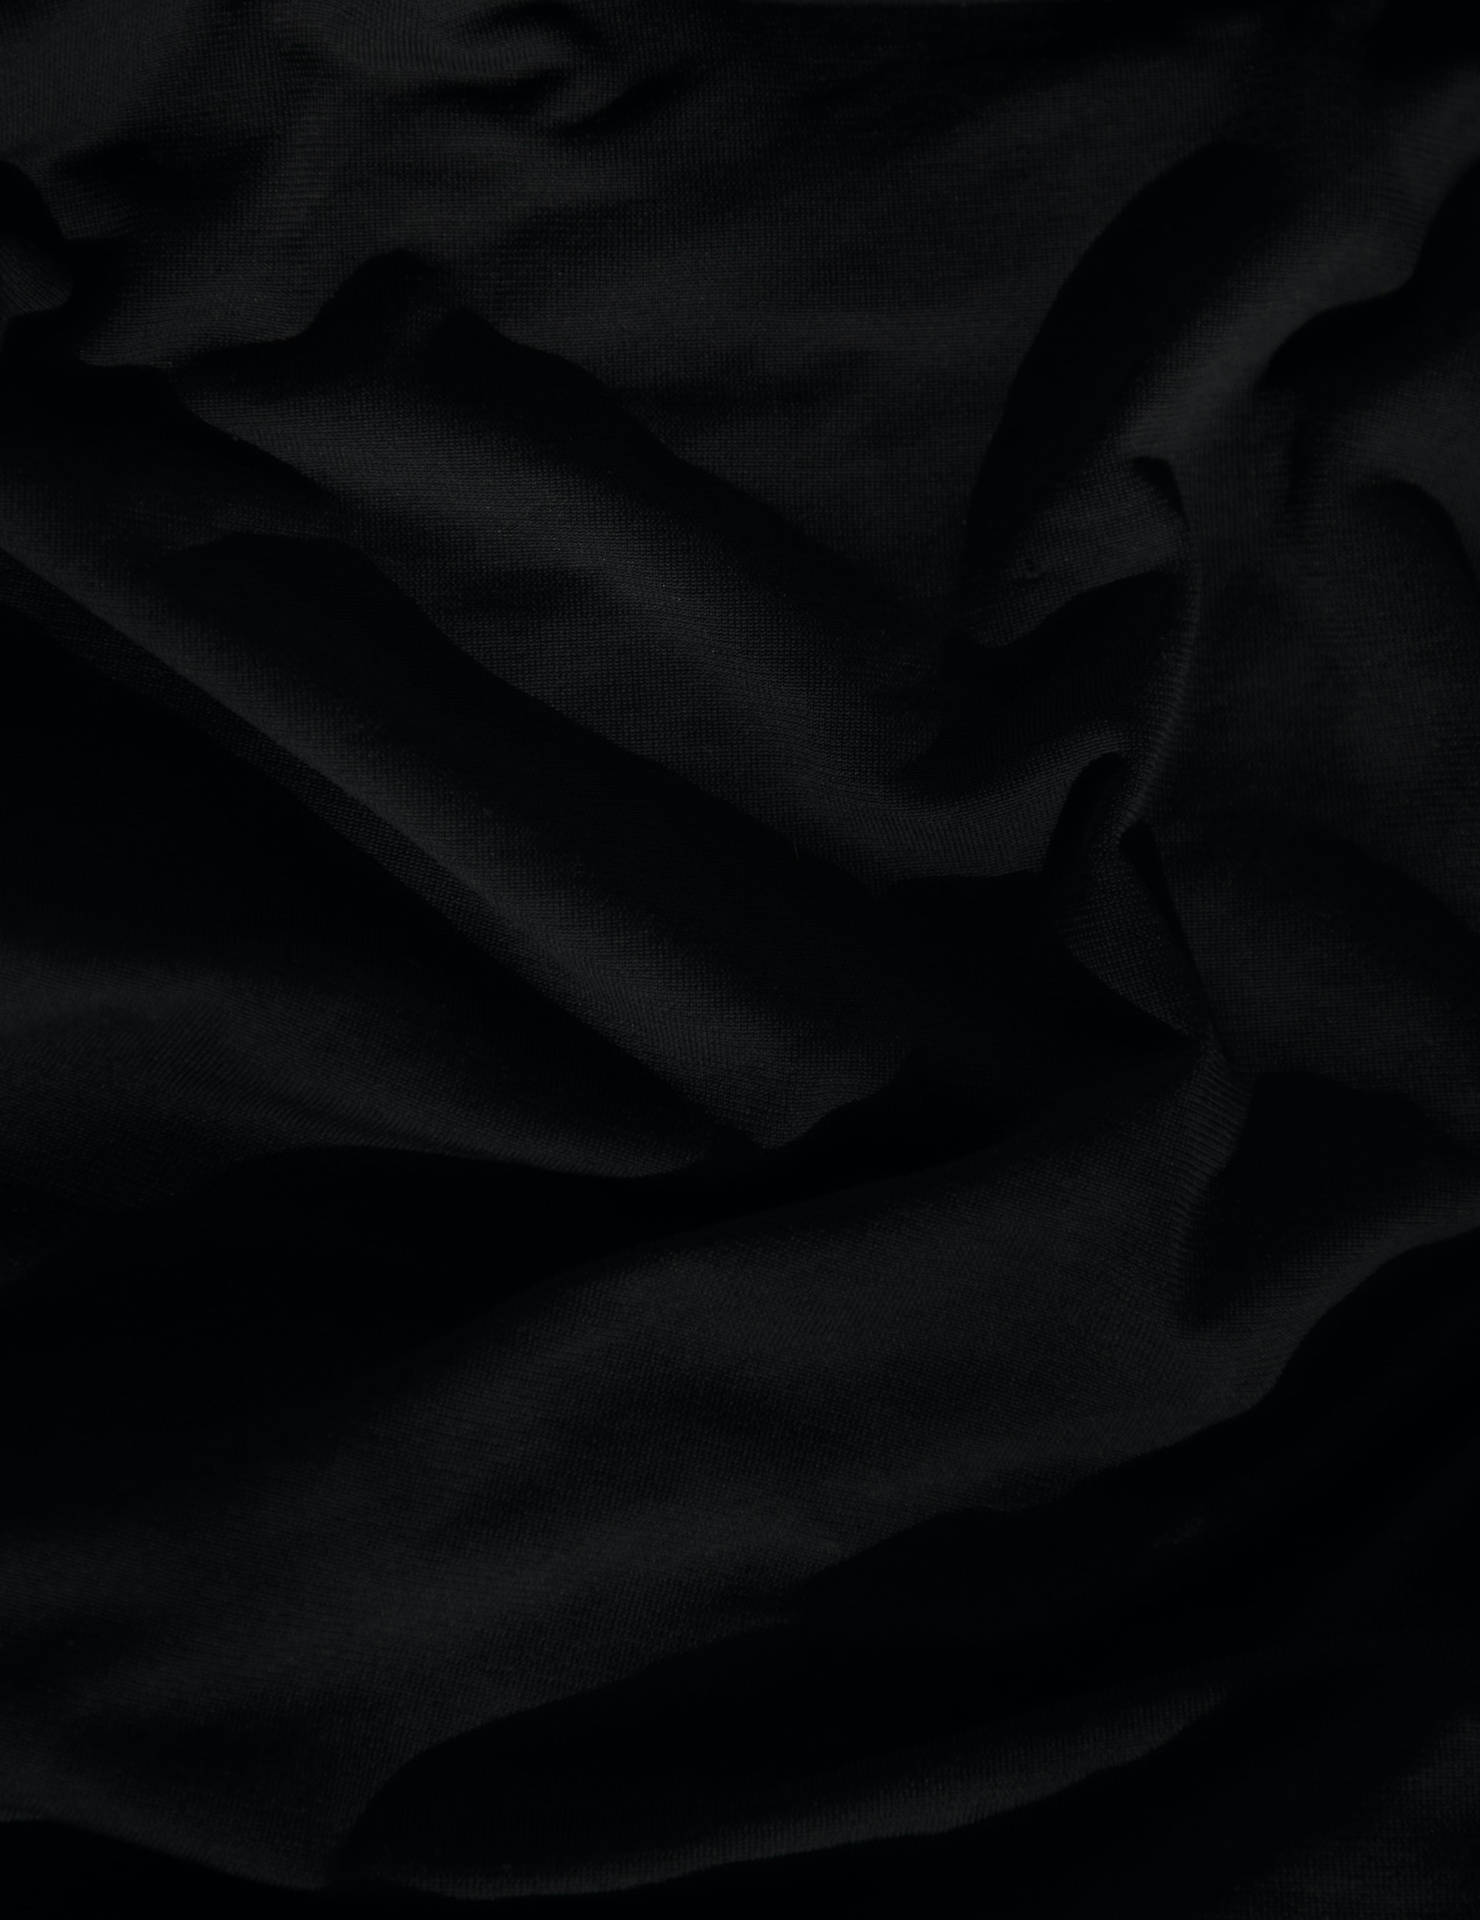 Rayon Cloth Black Aesthetic Tumblr Iphone Wallpaper